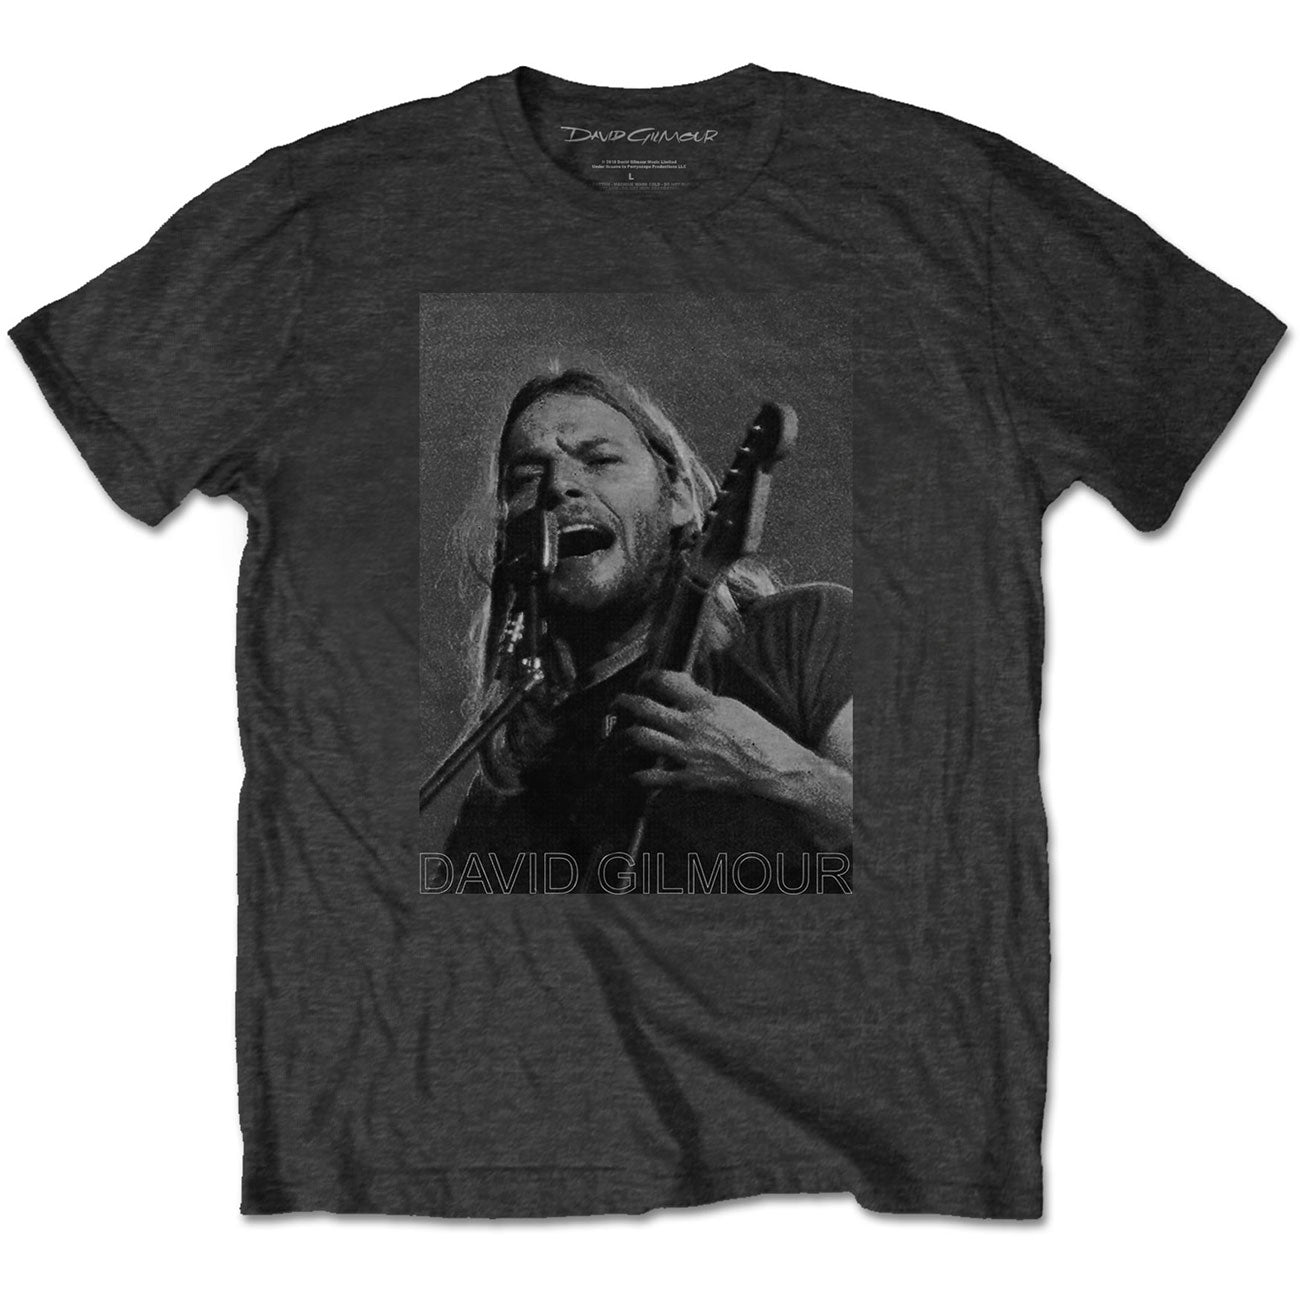 David Gilmour T-Shirt: On Microphone Half-tone